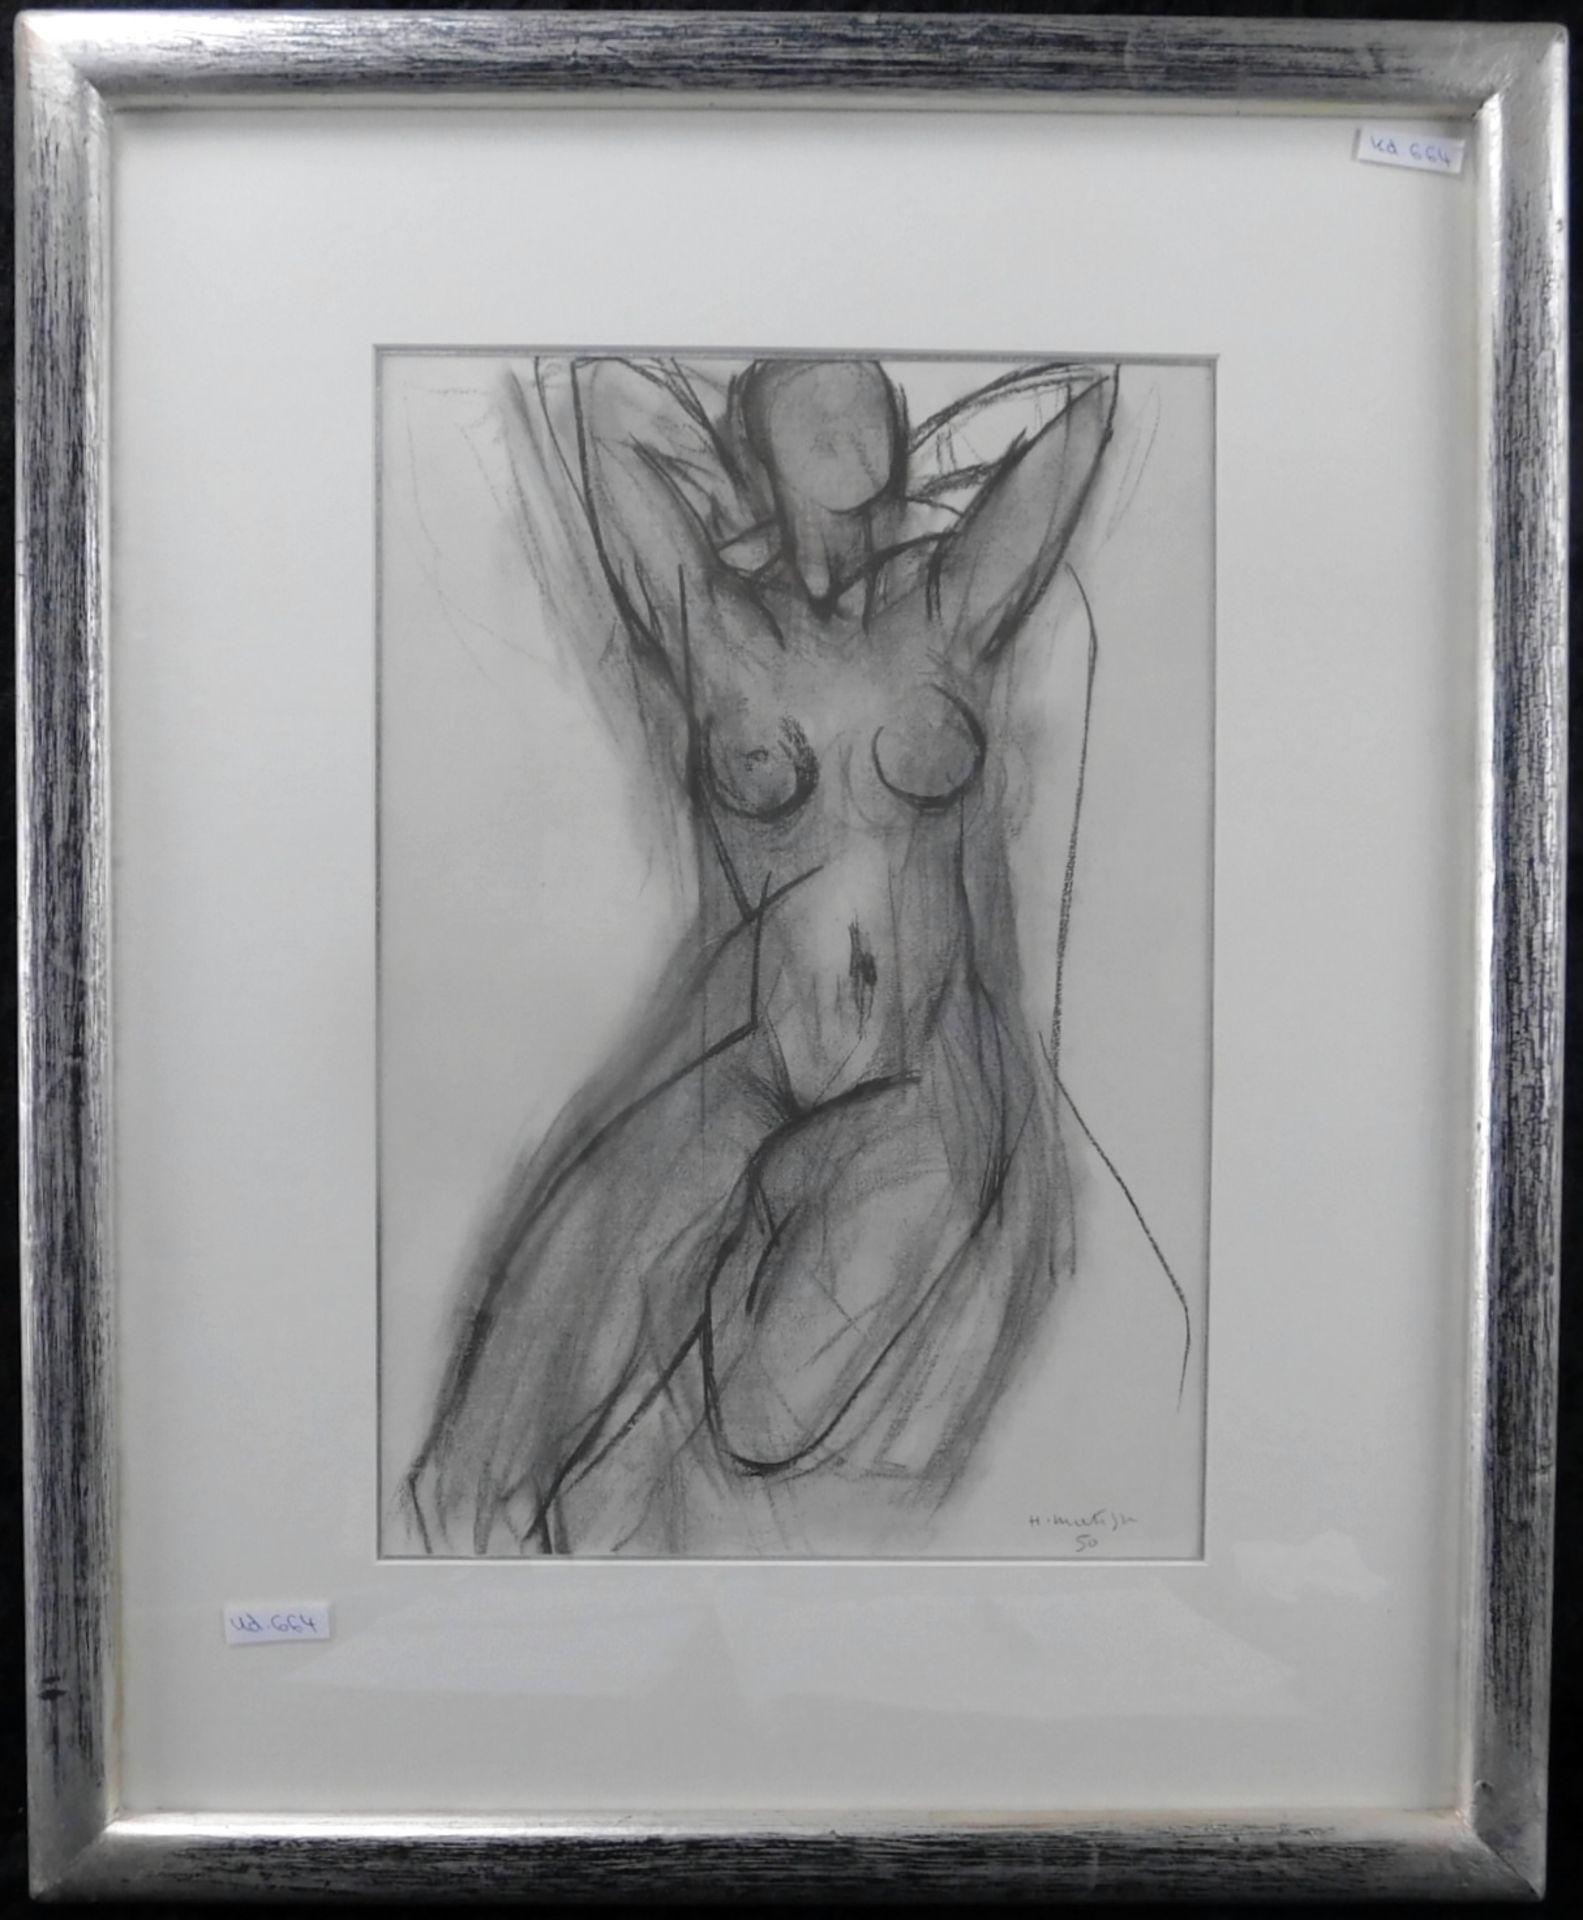 Henry Matisse Kunstdruck "Nu dans un fauteuil" 34,5 x 24 cm